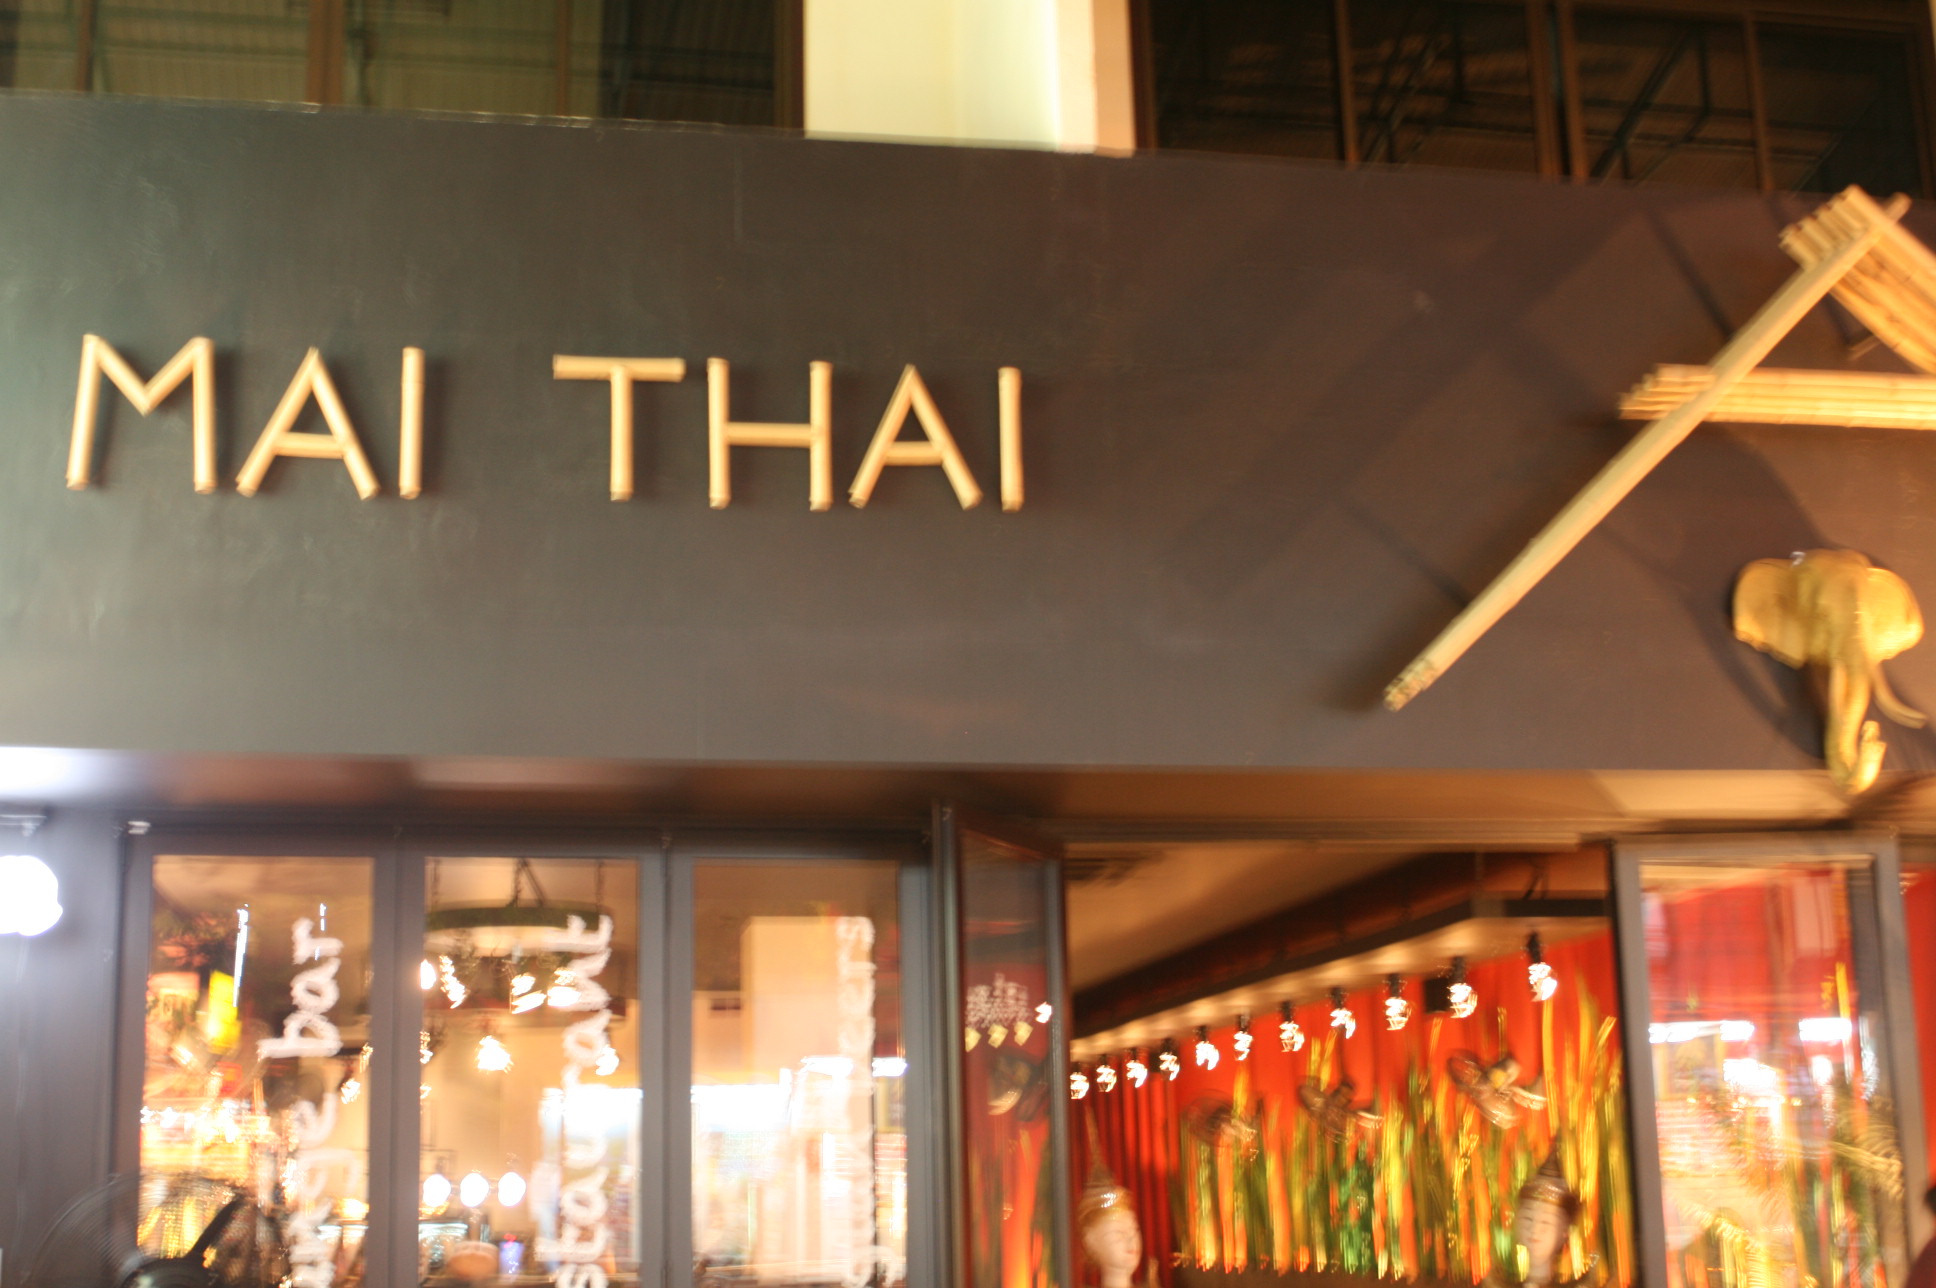 MAI THAi cuisine